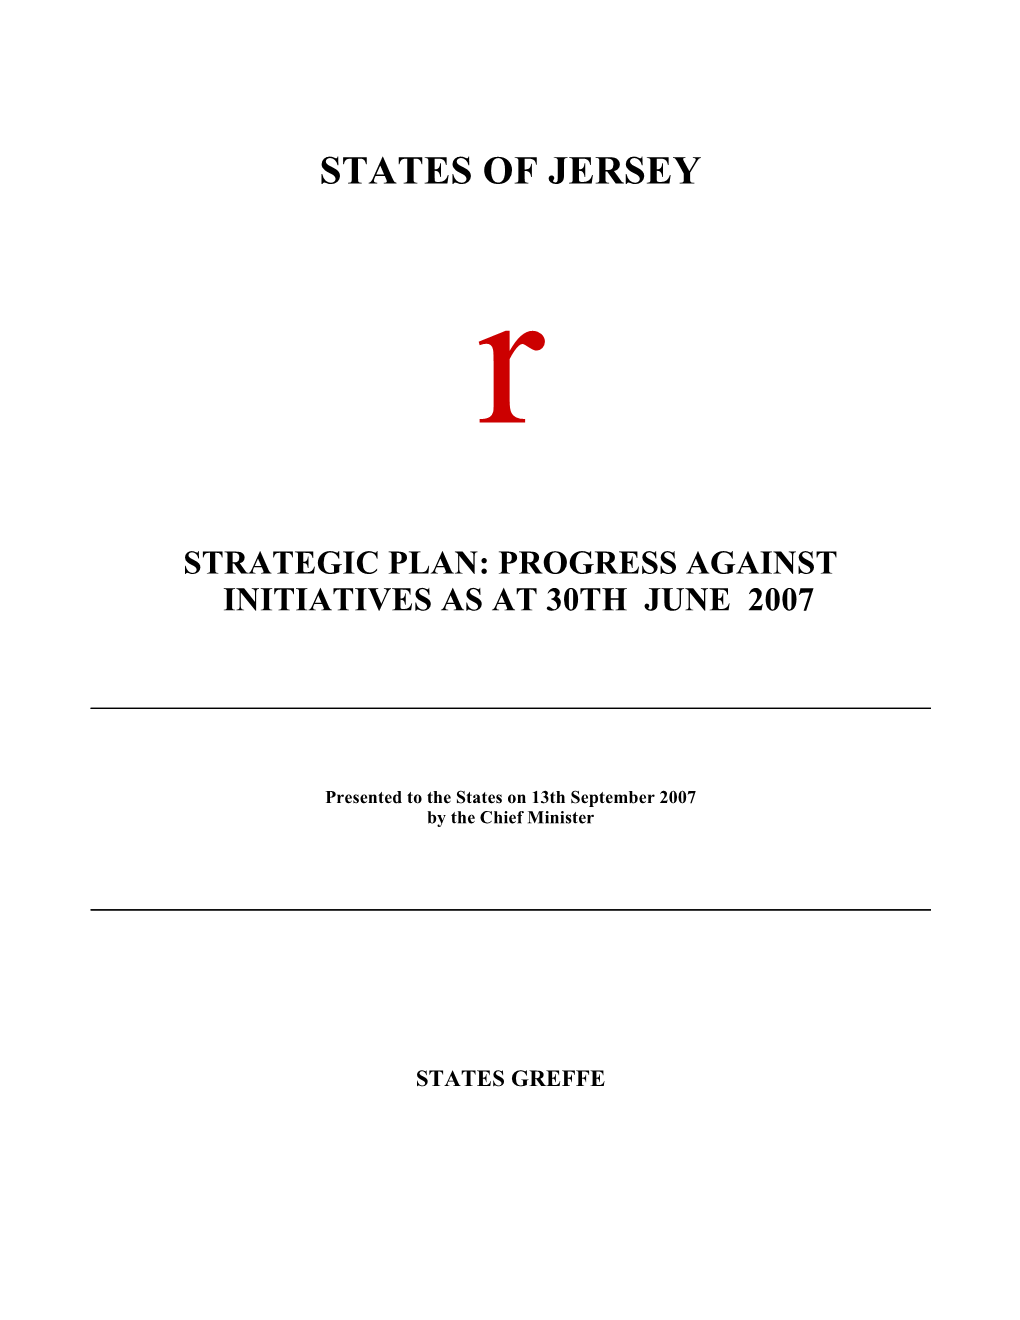 Strategic Plan: Progress Against Initiatives As at 30Th June 2007